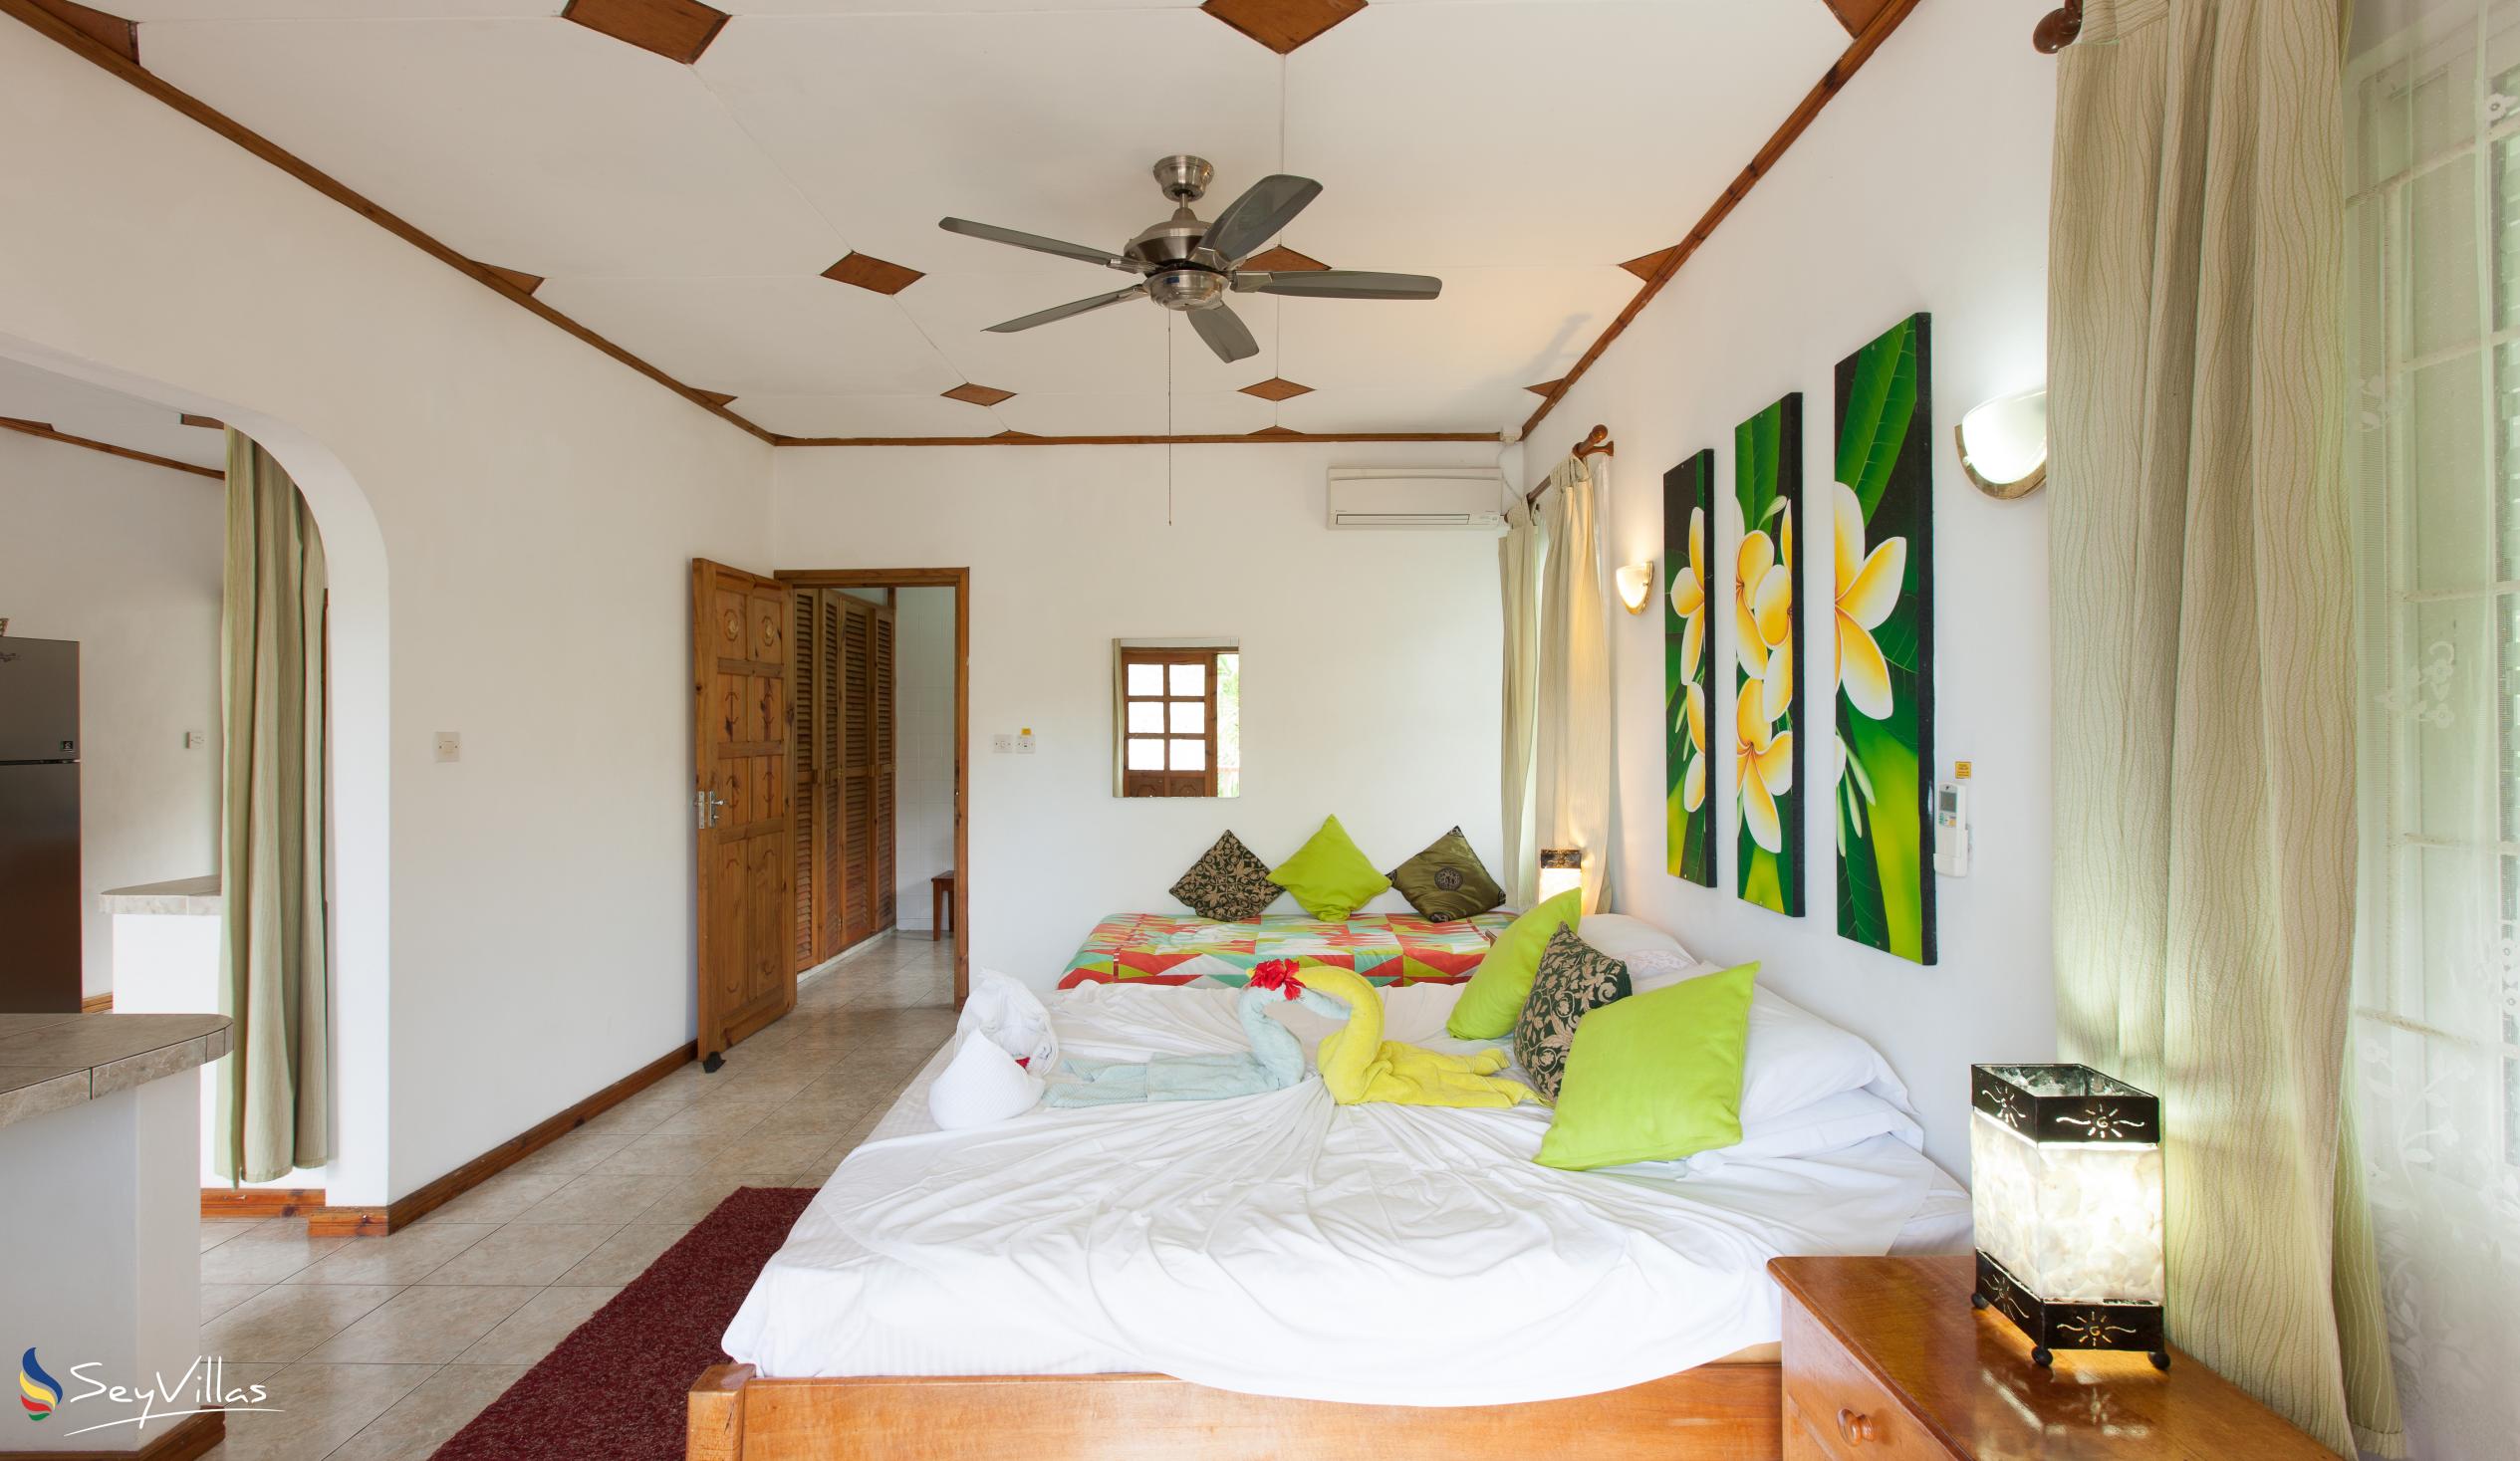 Photo 112: Sea View Lodge - Small Stilt-Villa - Praslin (Seychelles)